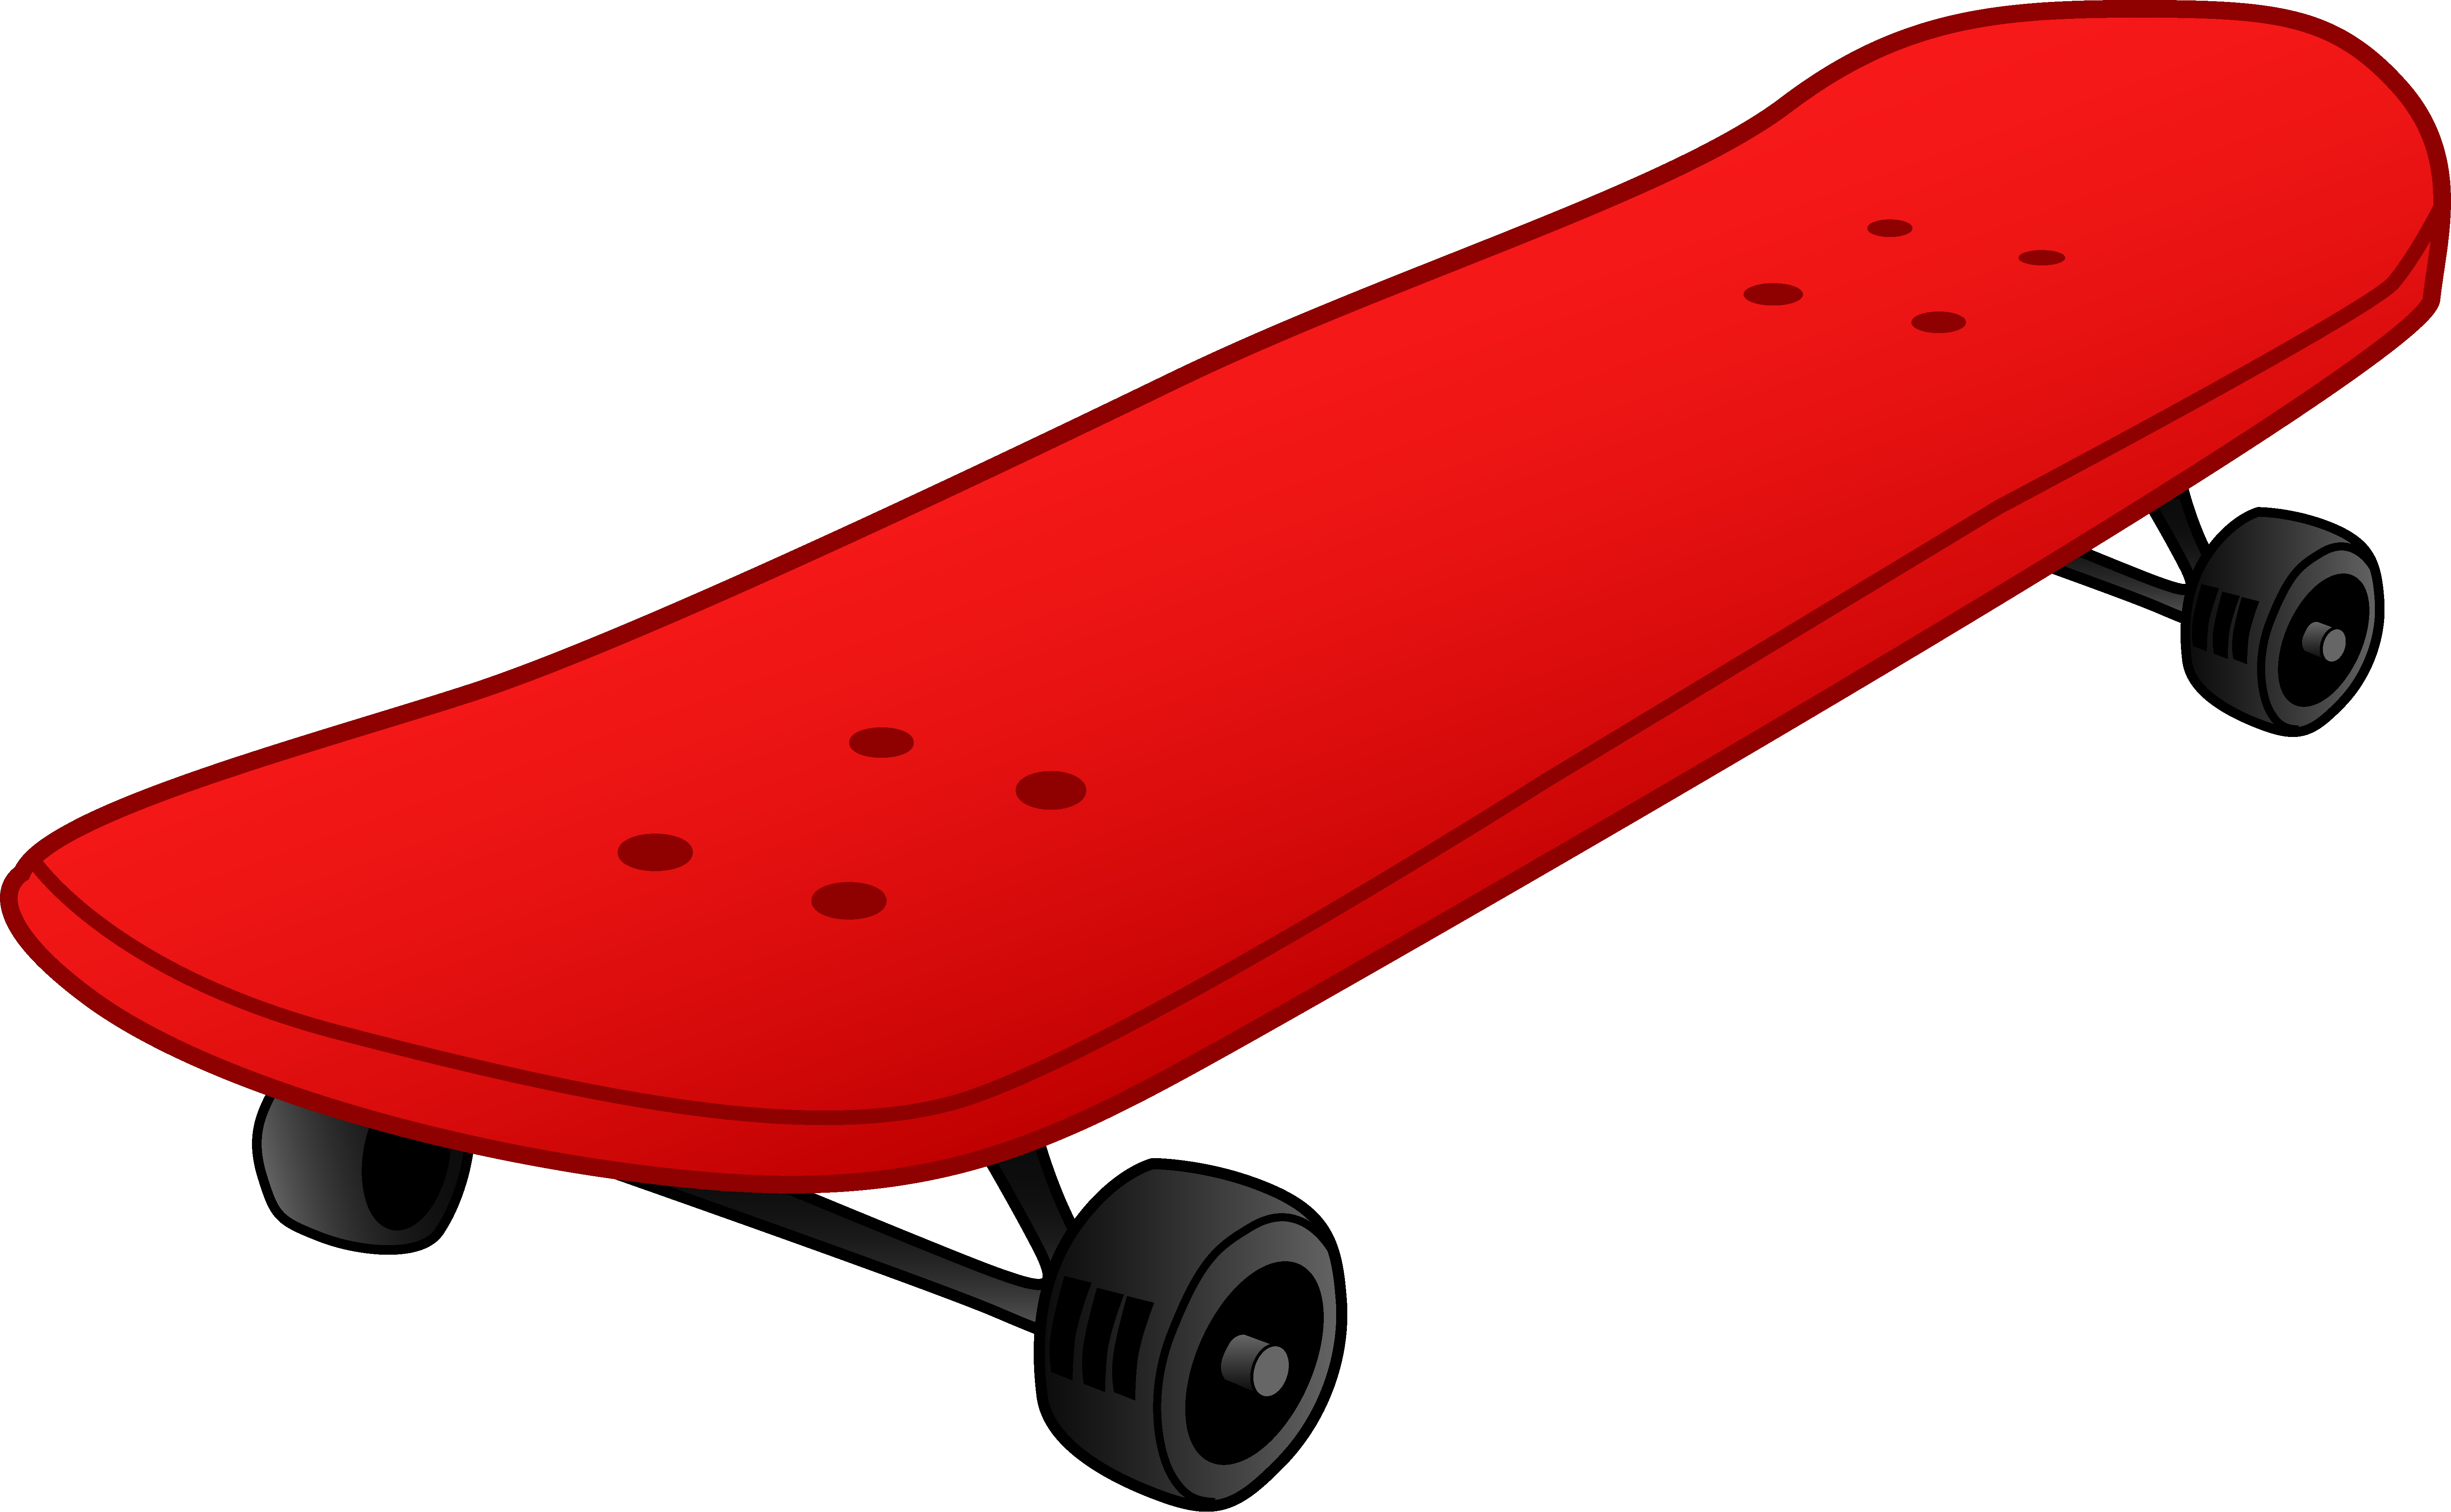 Images For > Skateboard Cartoon Image